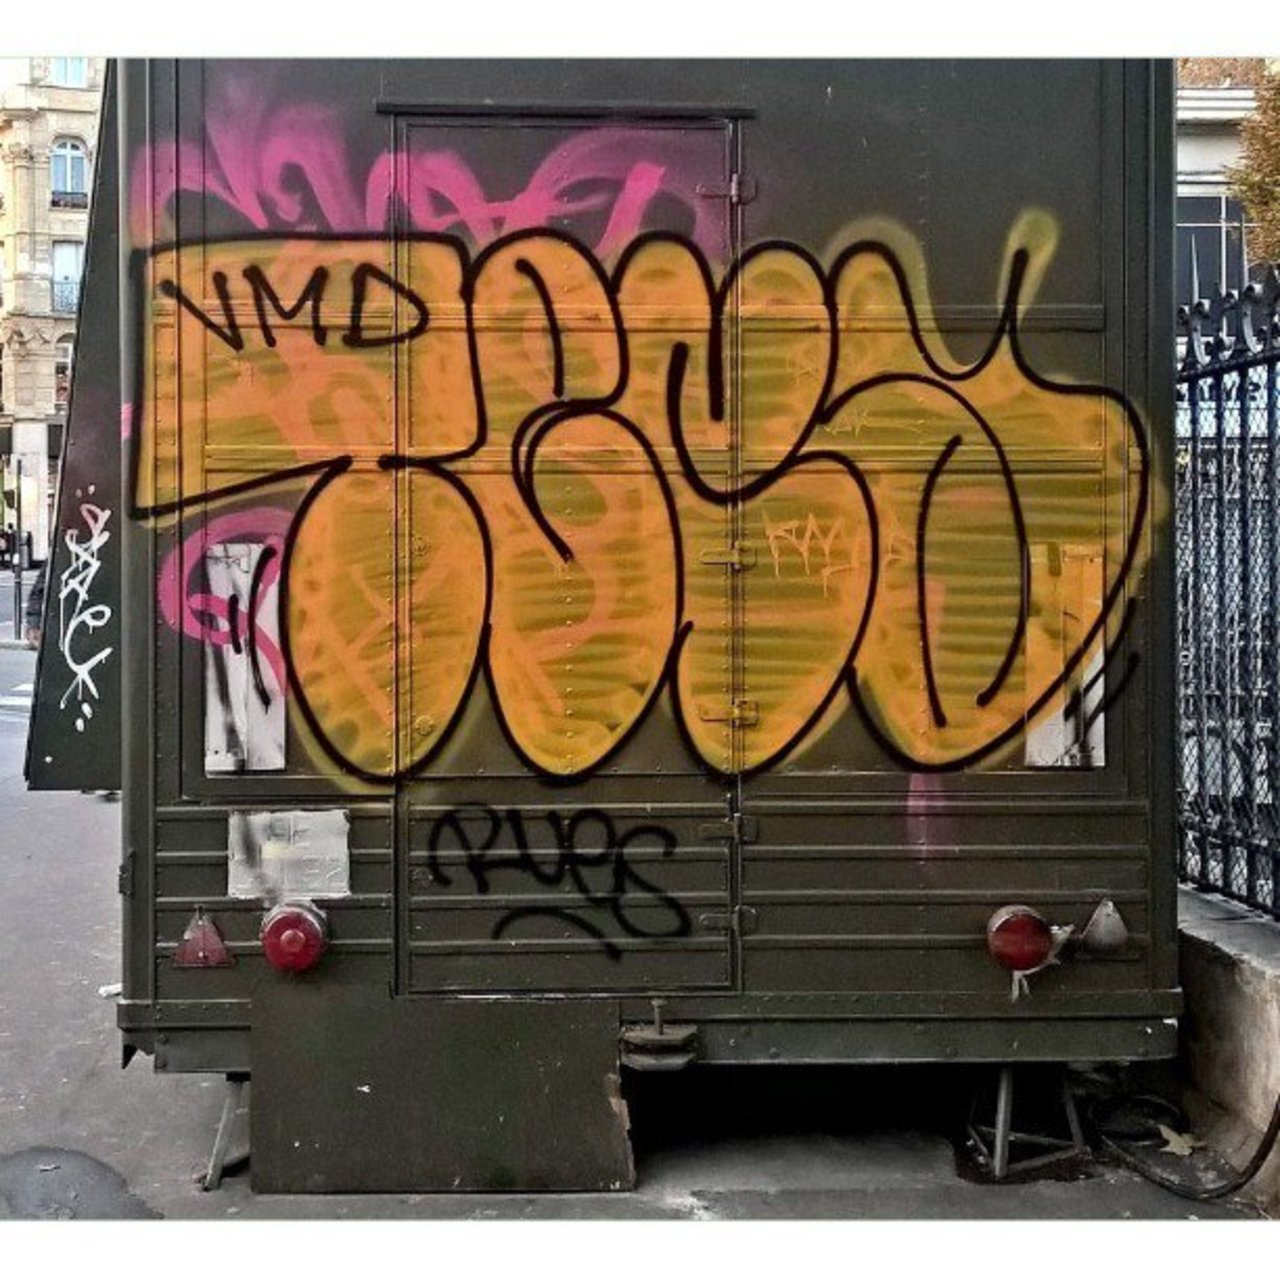 TERA
#streetart #graffiti #graff #art #fatcap #bombing #sprayart #spraycanart #wallart #handstyle #lettering #urban… https://t.co/KcannfyX01